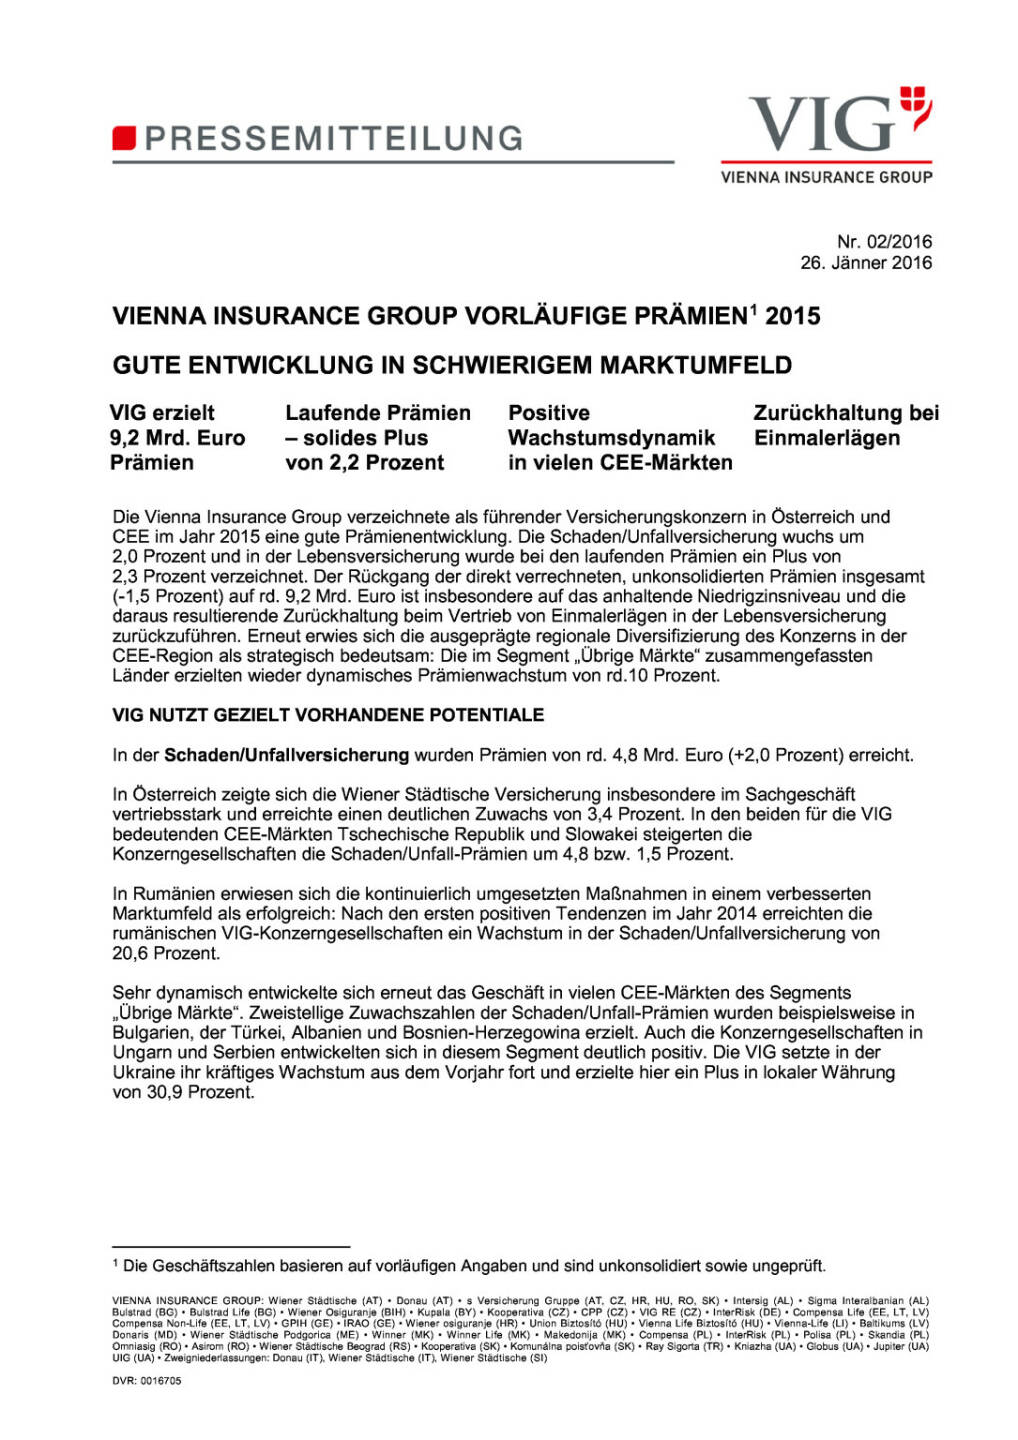 Vienna Insurance Group Prämienentwicklung, Seite 1/5, komplettes Dokument unter http://boerse-social.com/static/uploads/file_564_vienna_insurance_group_pramienentwicklung.pdf